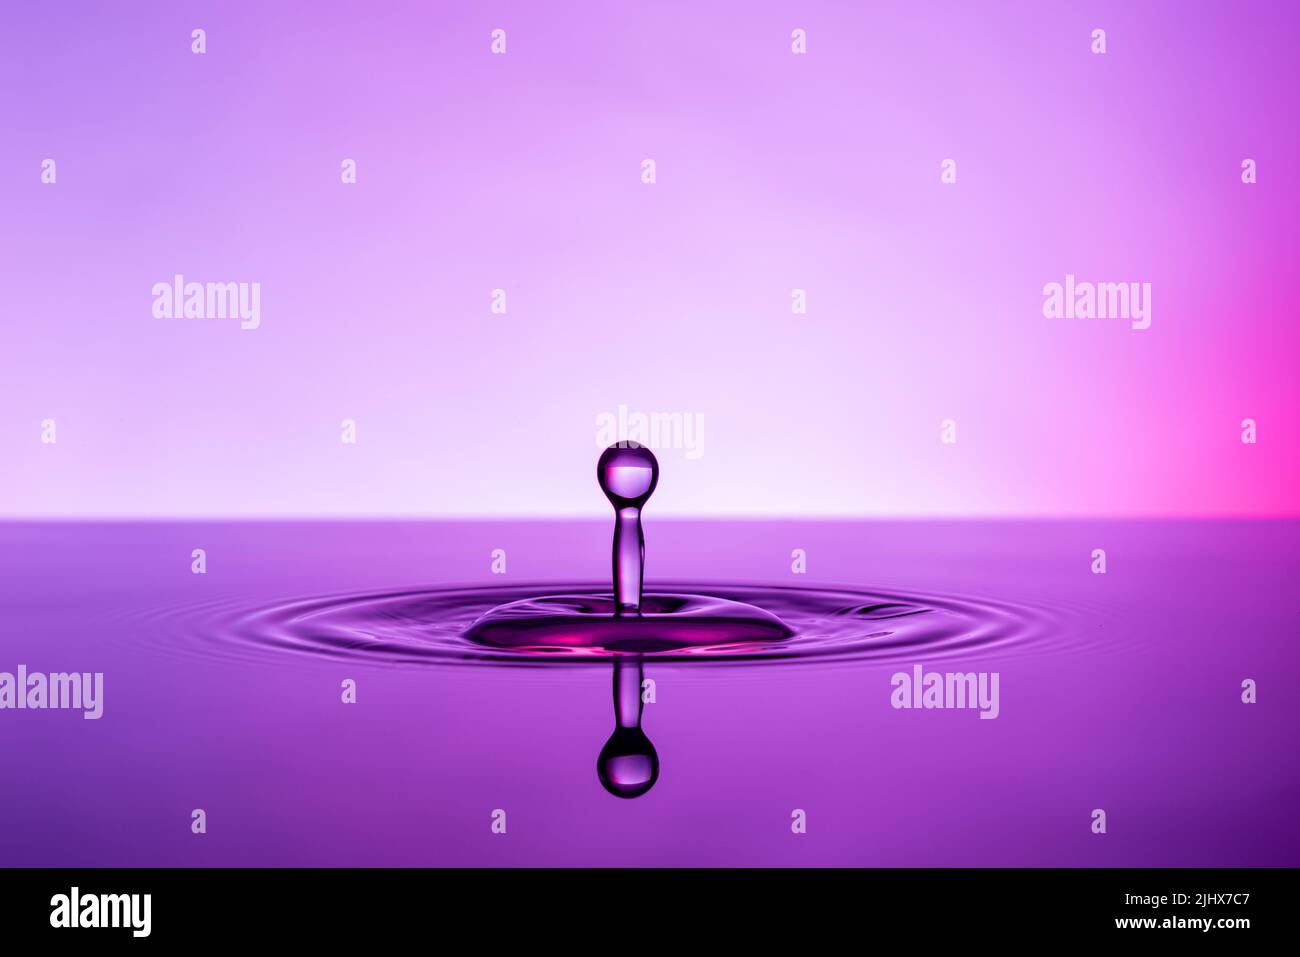 waters drop in purple background Stock Photo